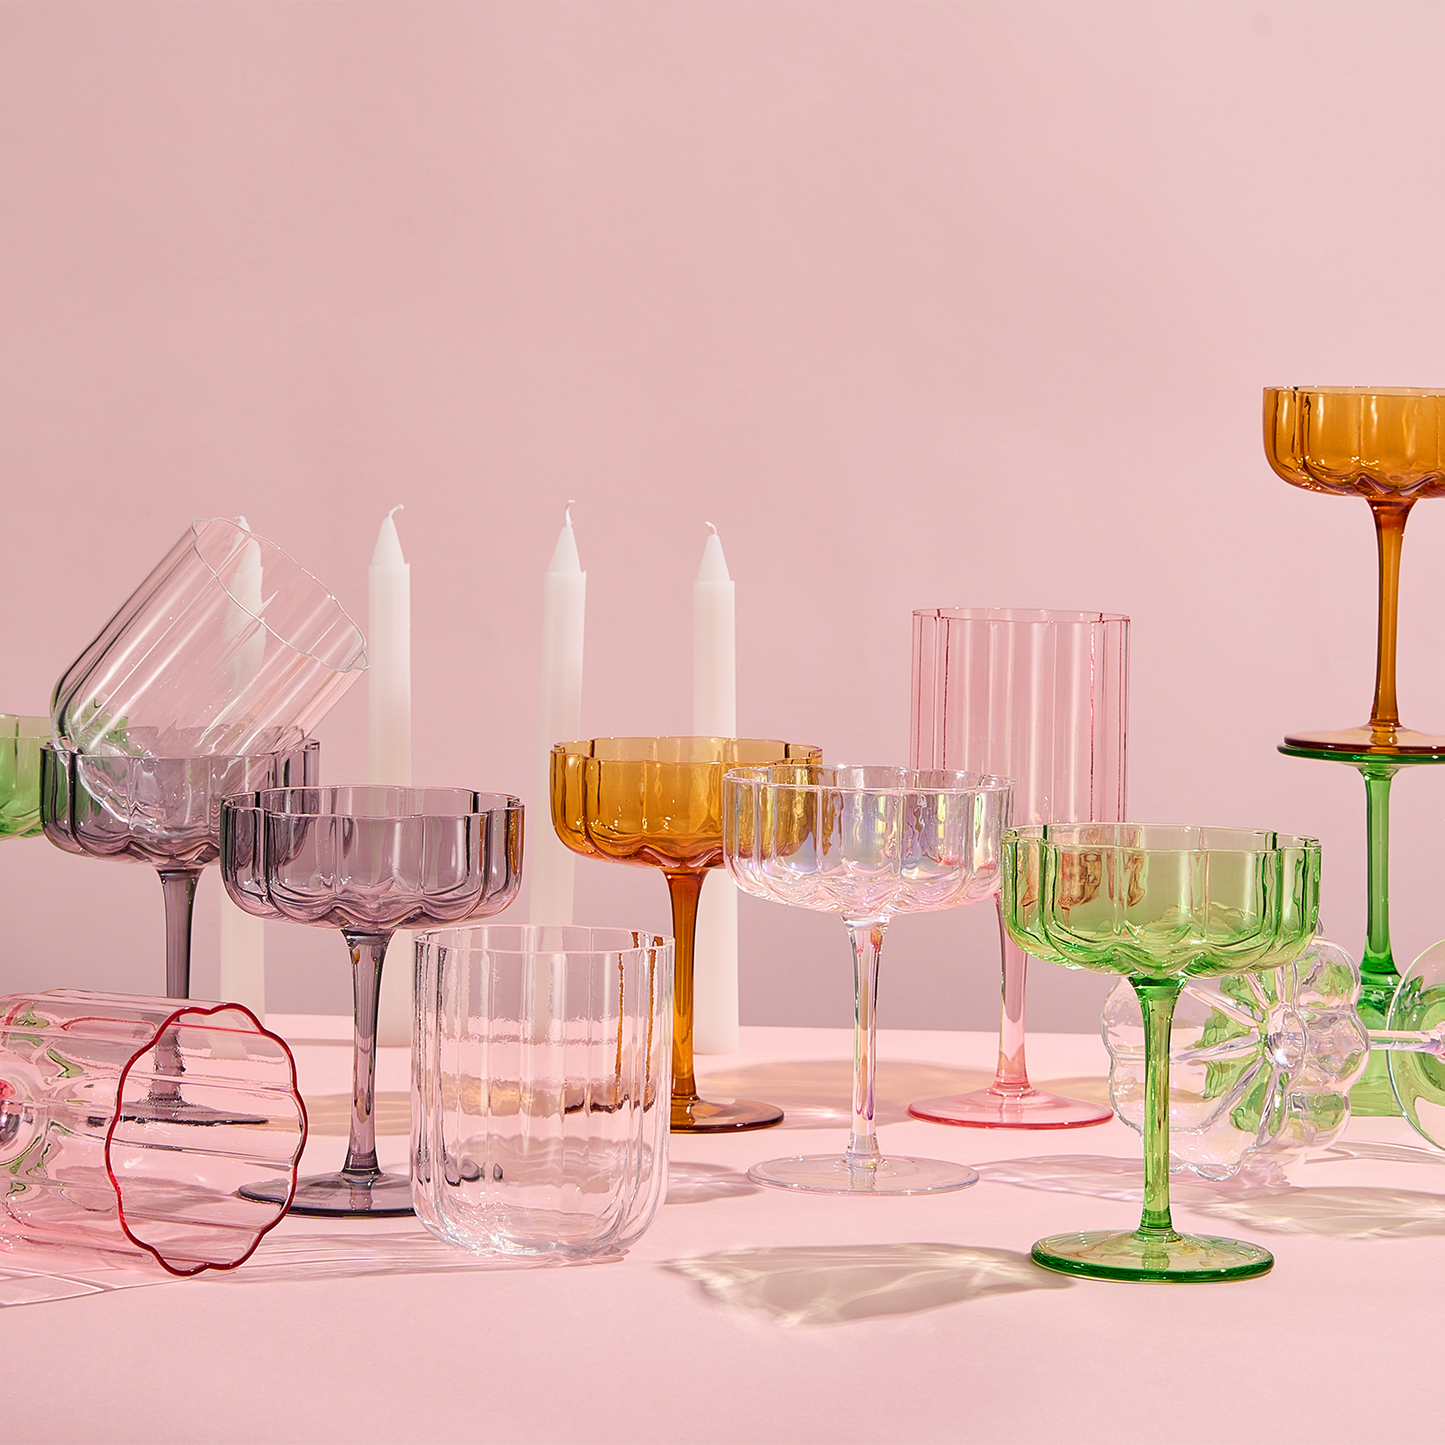 Flower Wave Wine Glassware, Set of 2